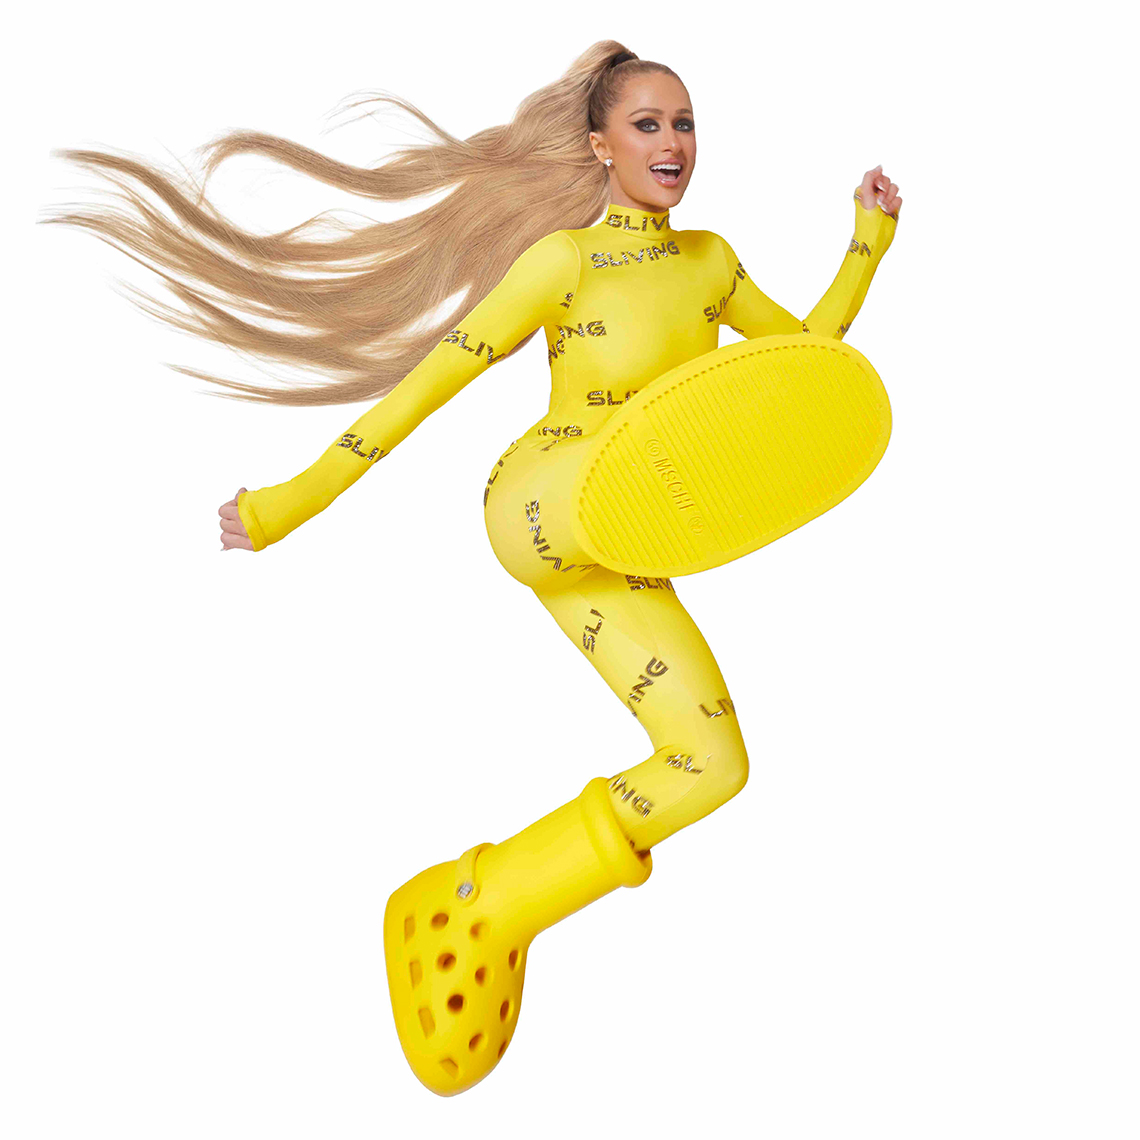 Paris Hilton Mschf Crocs Big Red Boot Yellow 4